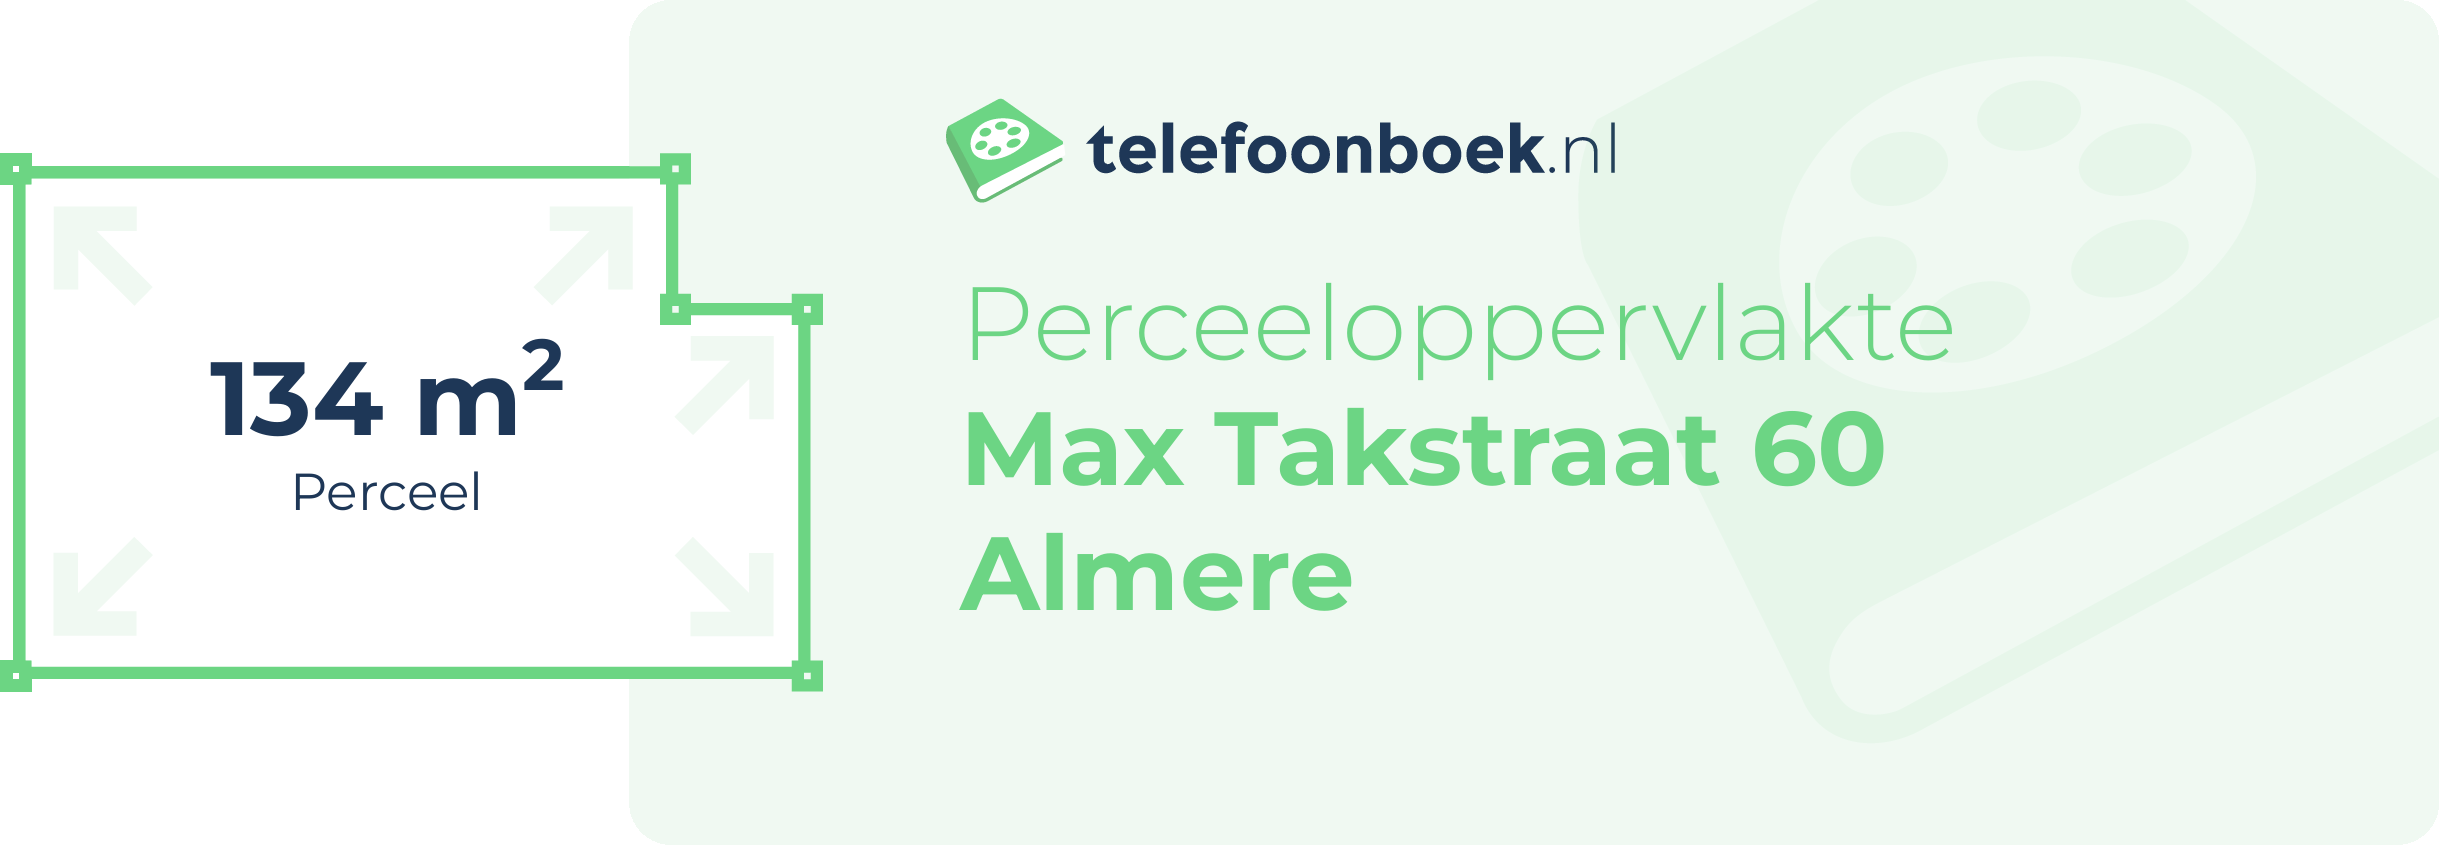 Perceeloppervlakte Max Takstraat 60 Almere